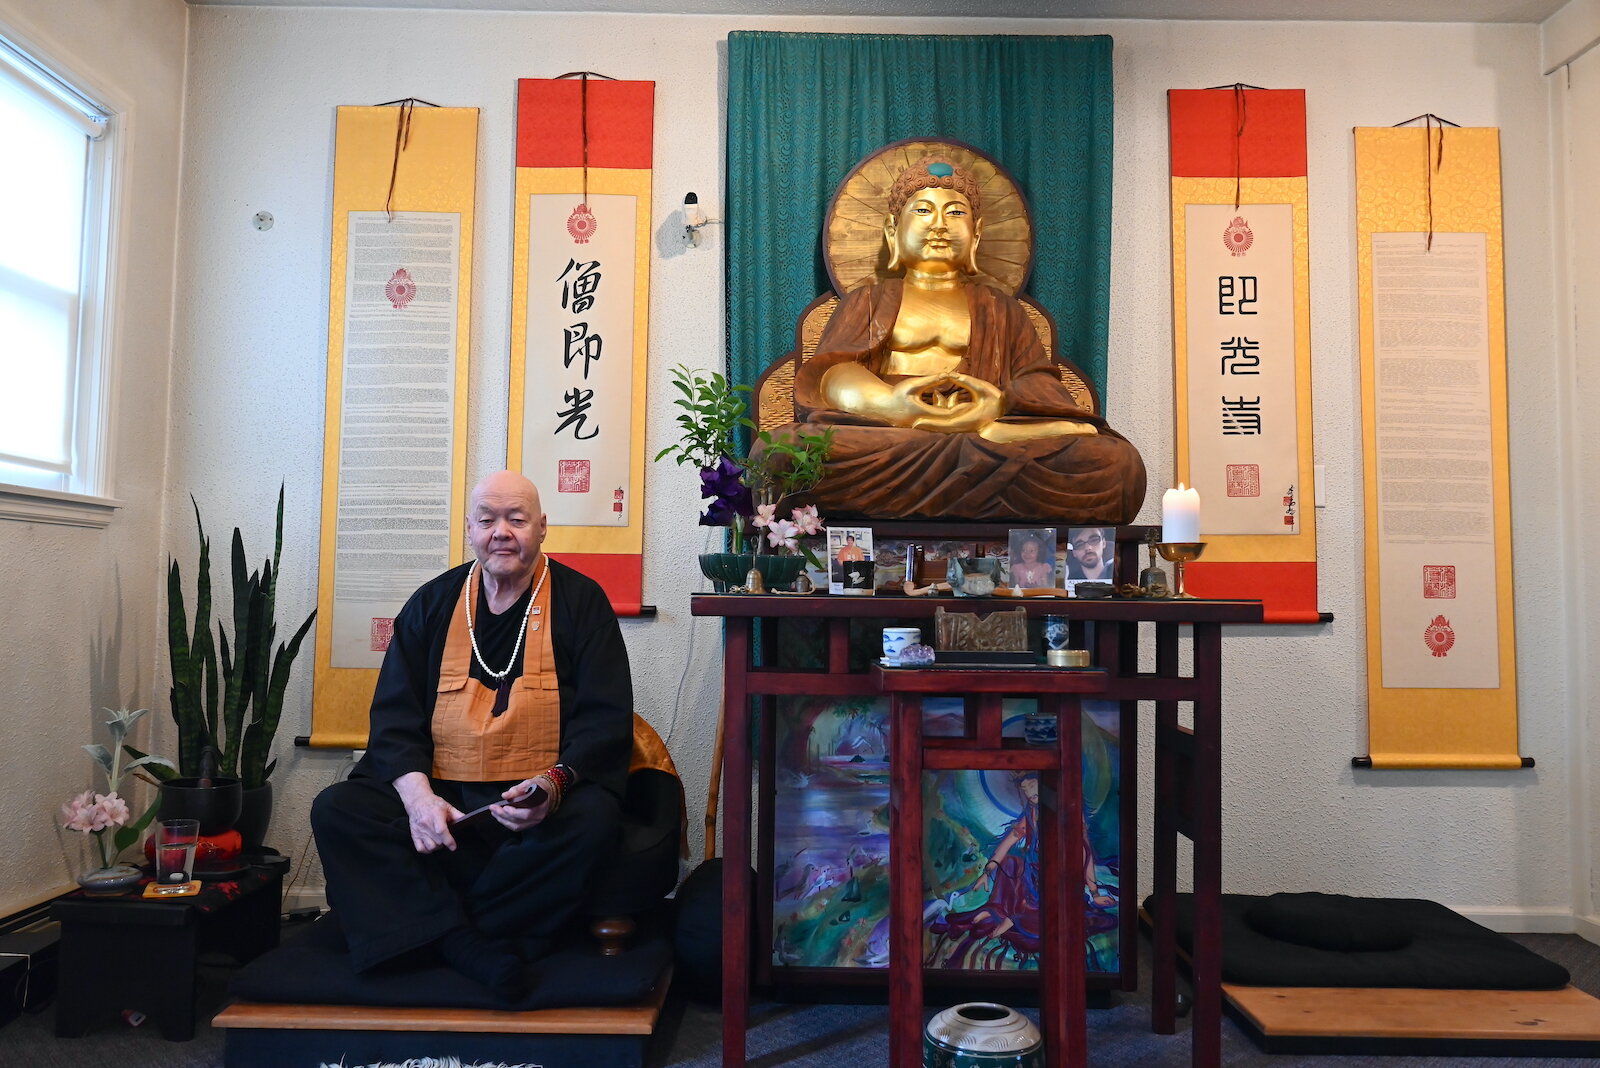 Sokuzan is the founding abbot of the SokukoJi Buddhist Temple Monastery in Battle Creek.